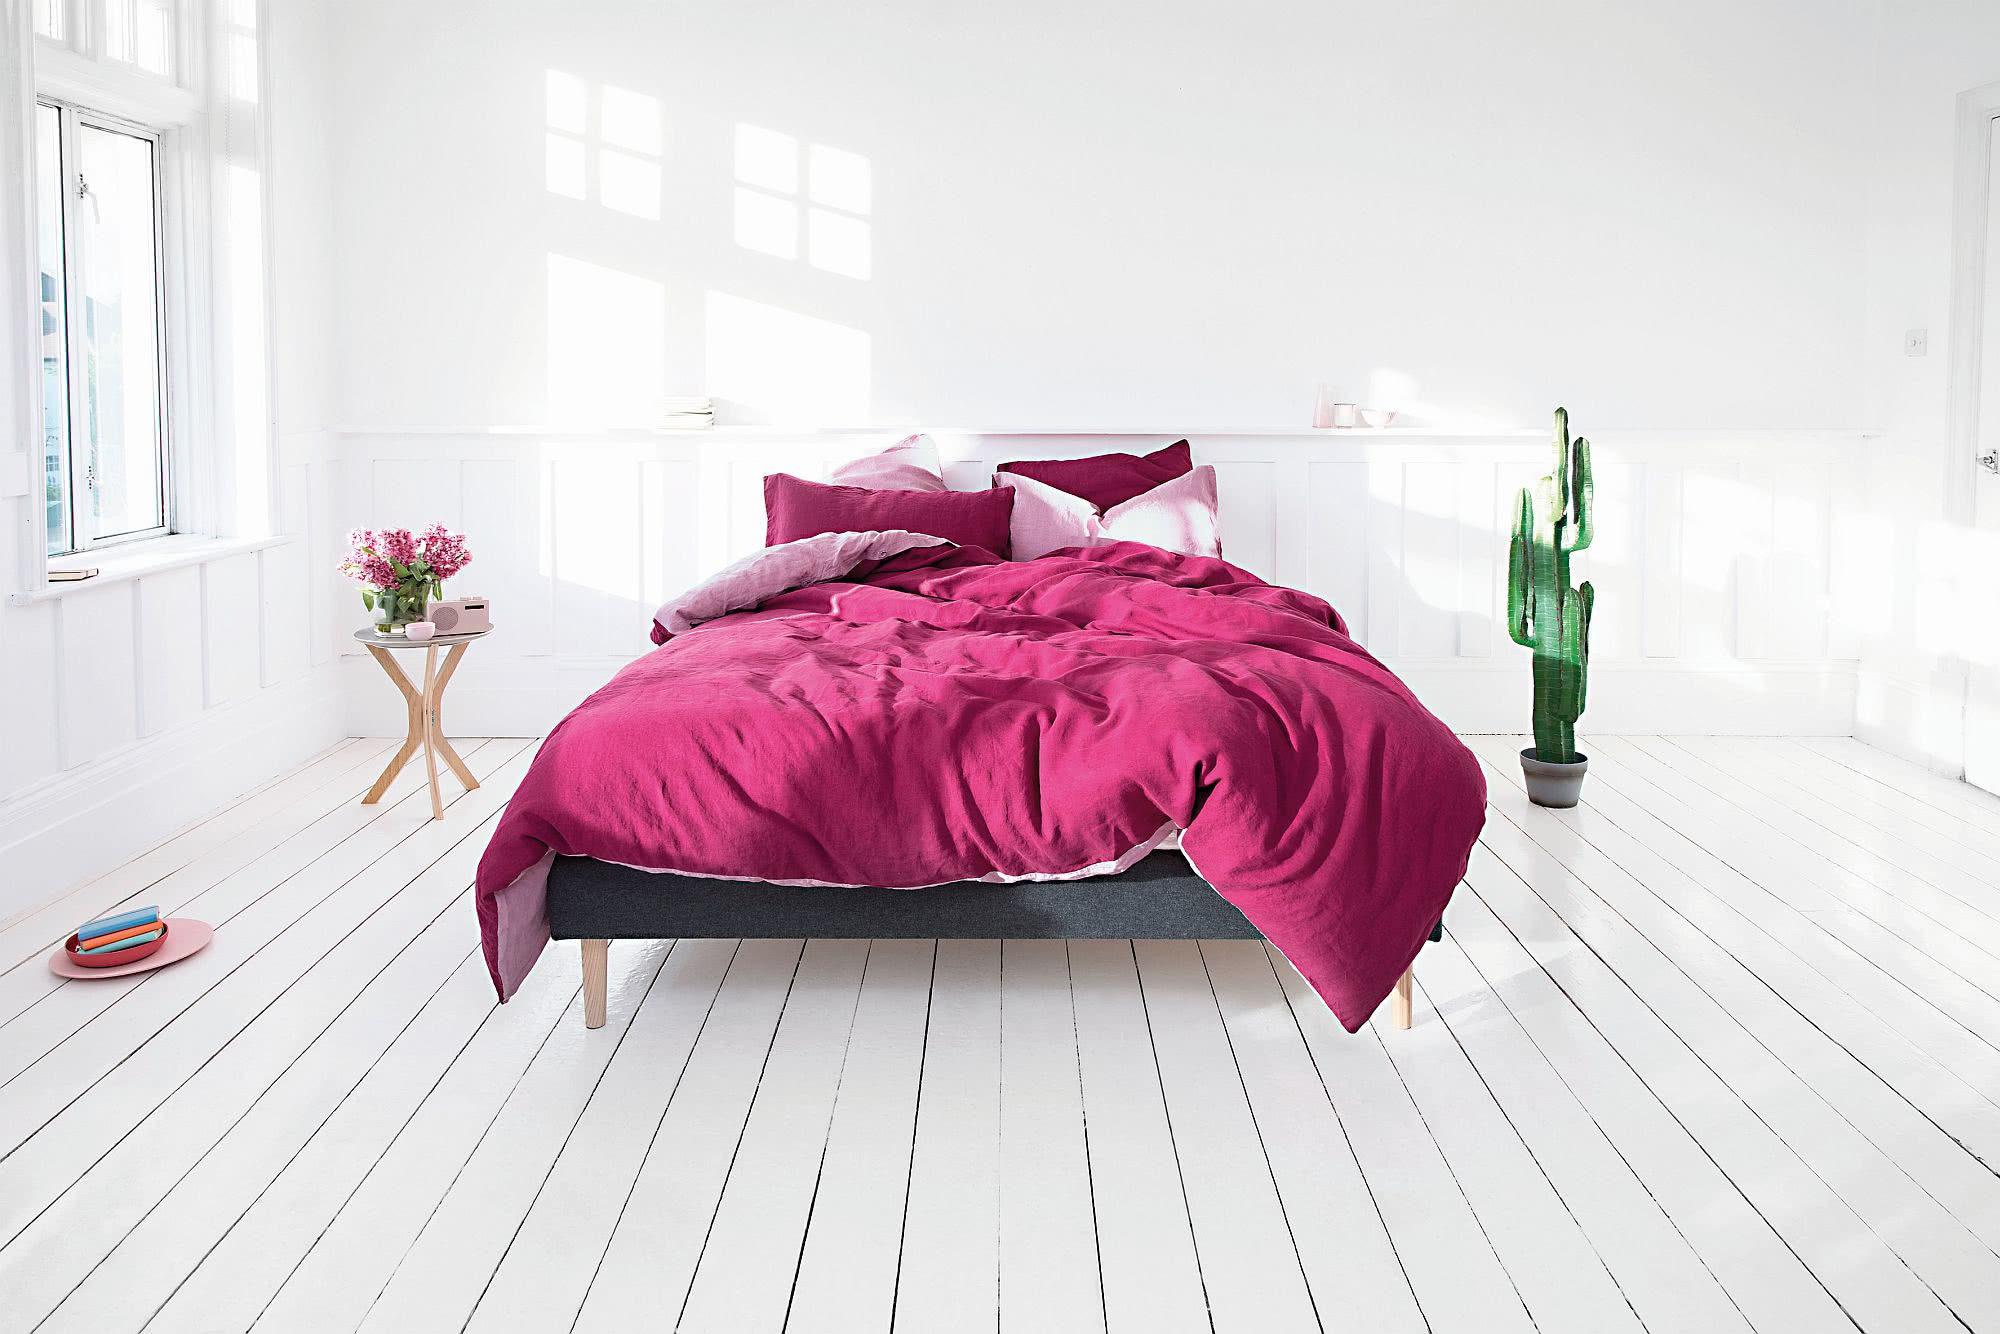 Fuchsia bed linen